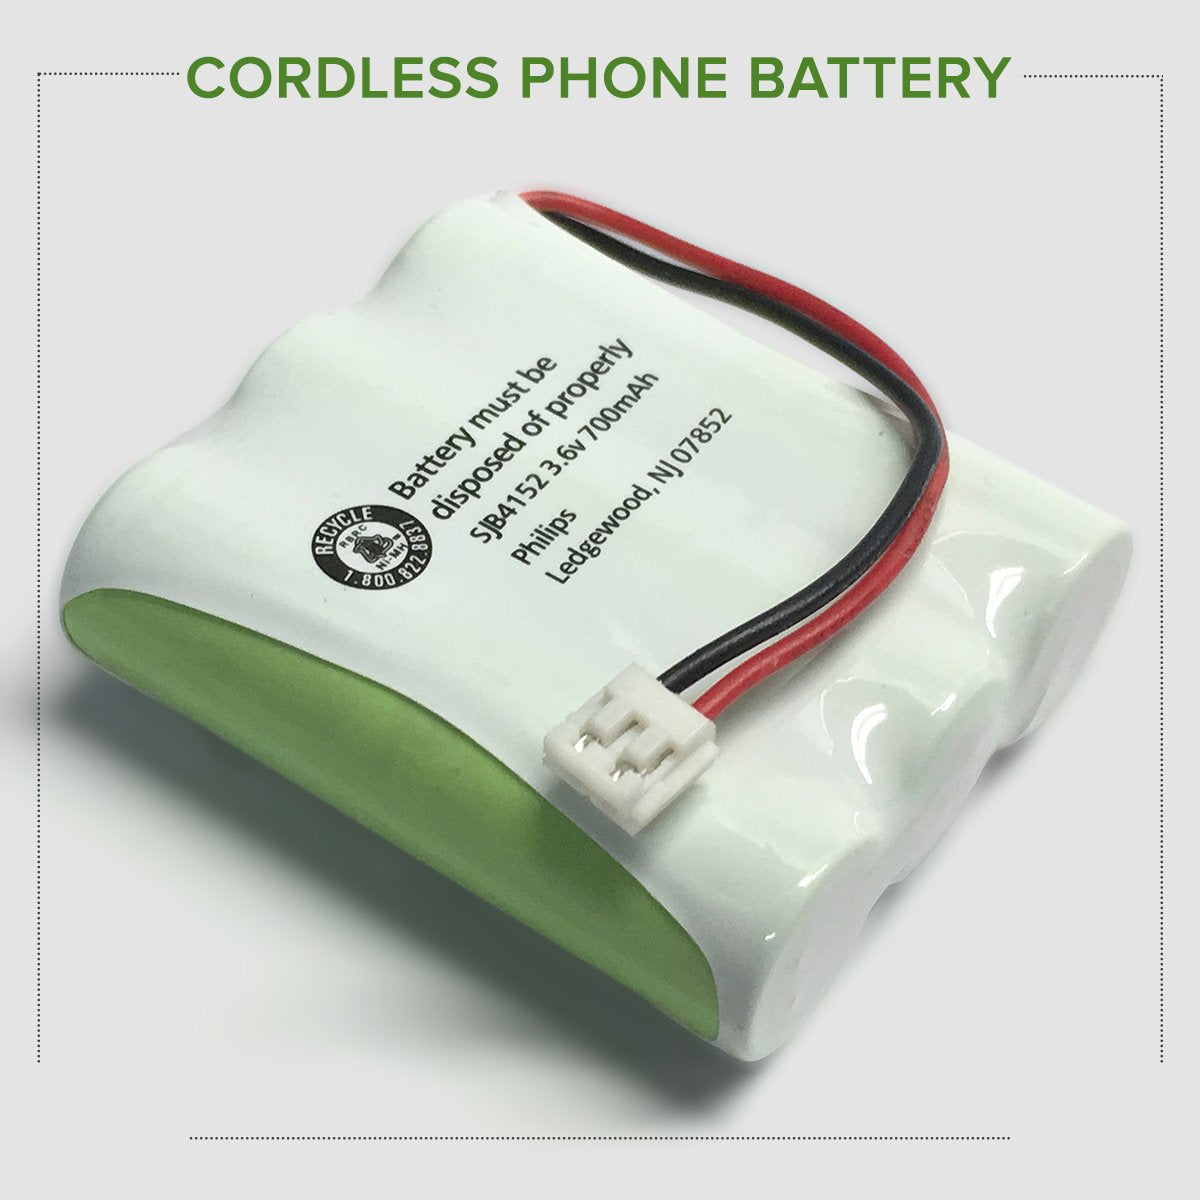 GE 1862040 Cordless Phone Battery